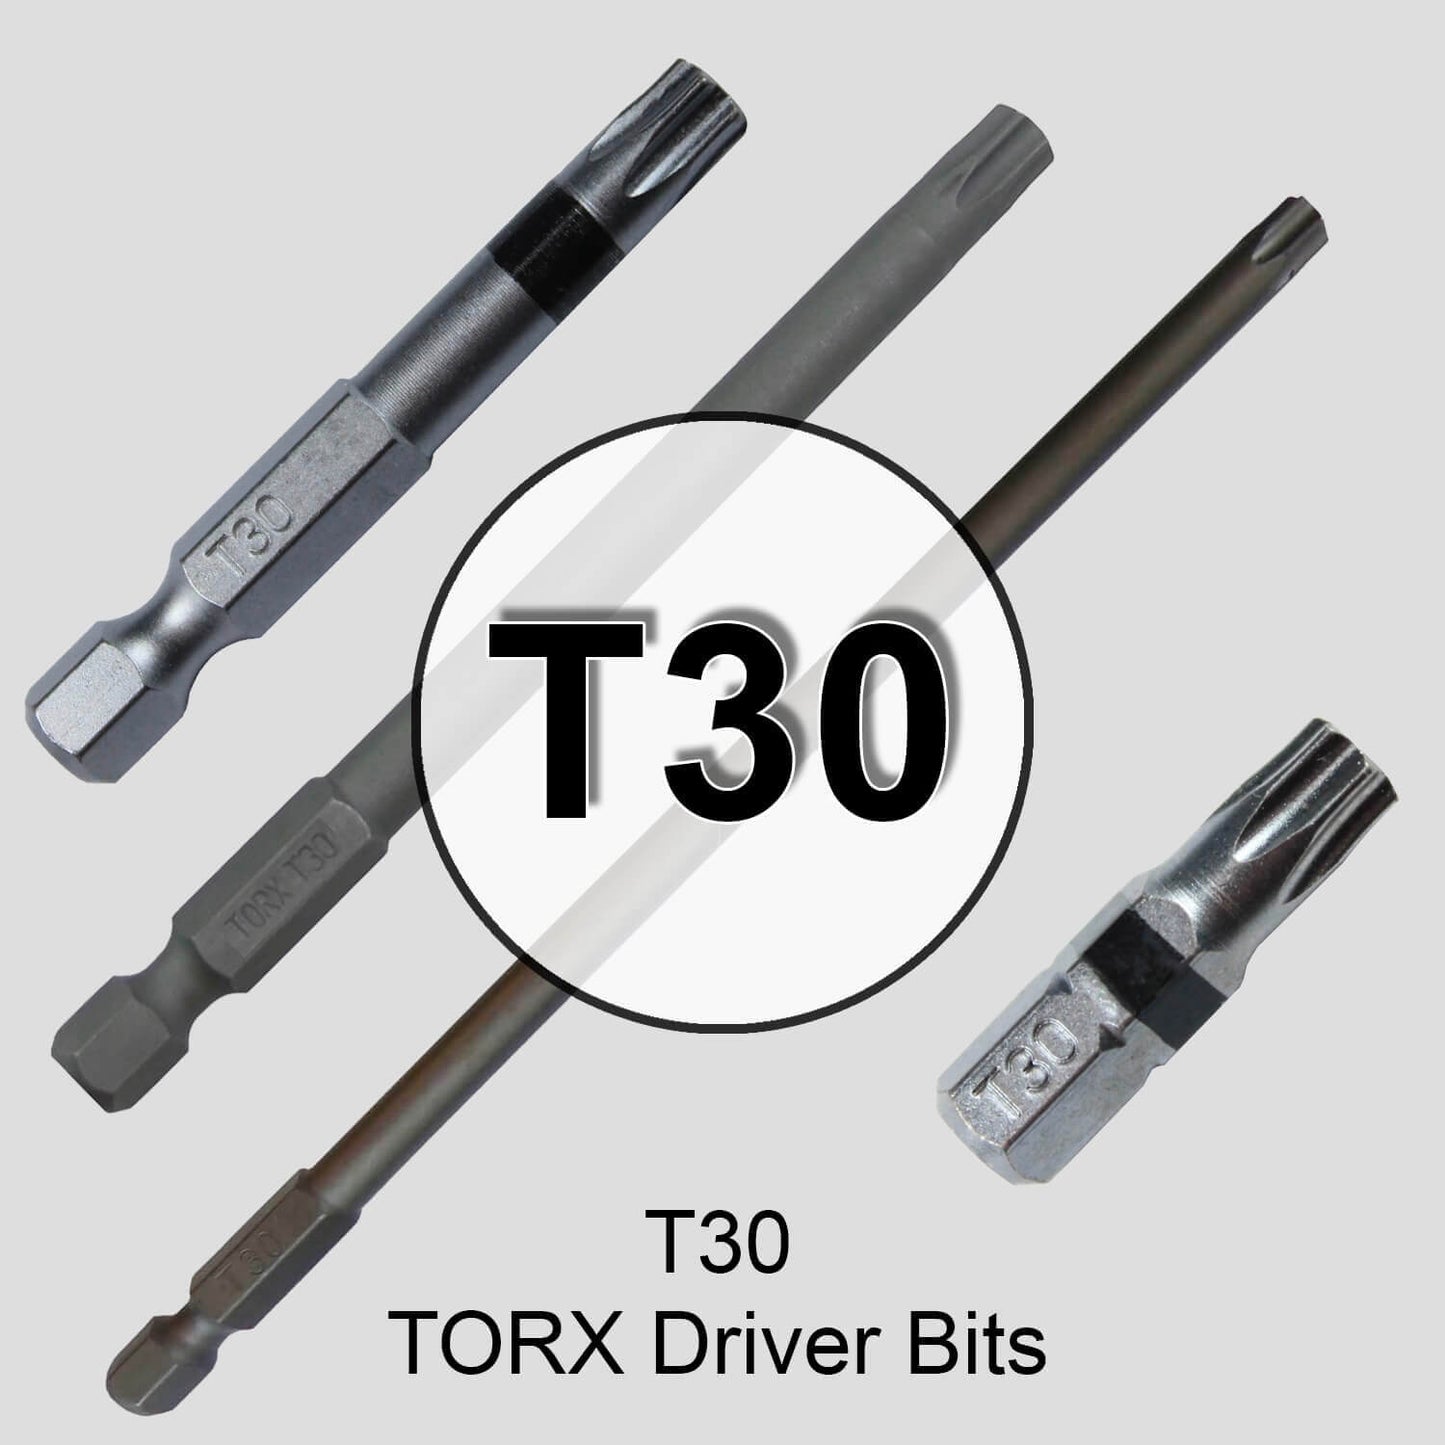 T30 (T-30) Torx/Star Driver Bit - Color Coded T30 Torx/Star Drive Bit for Screws and Fasteners Requiring T30 (T-30) Size Bits